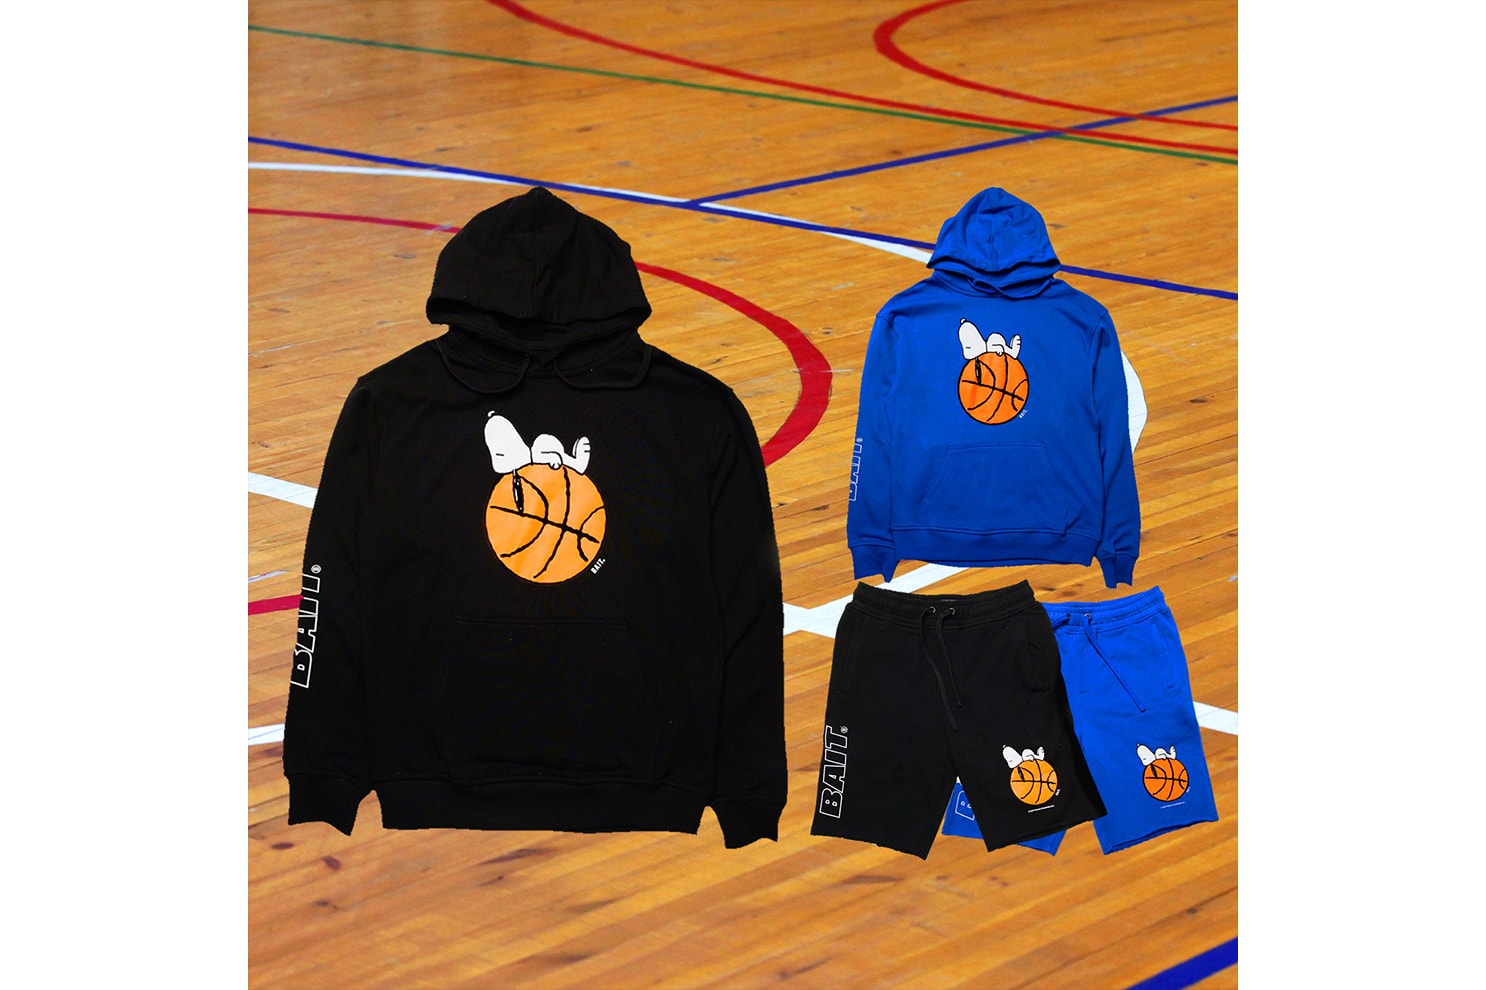 BAIT x Peanuts Basketball Collection NbA LAKERS basketball PEANUTS cartoon Charles M. Schulz